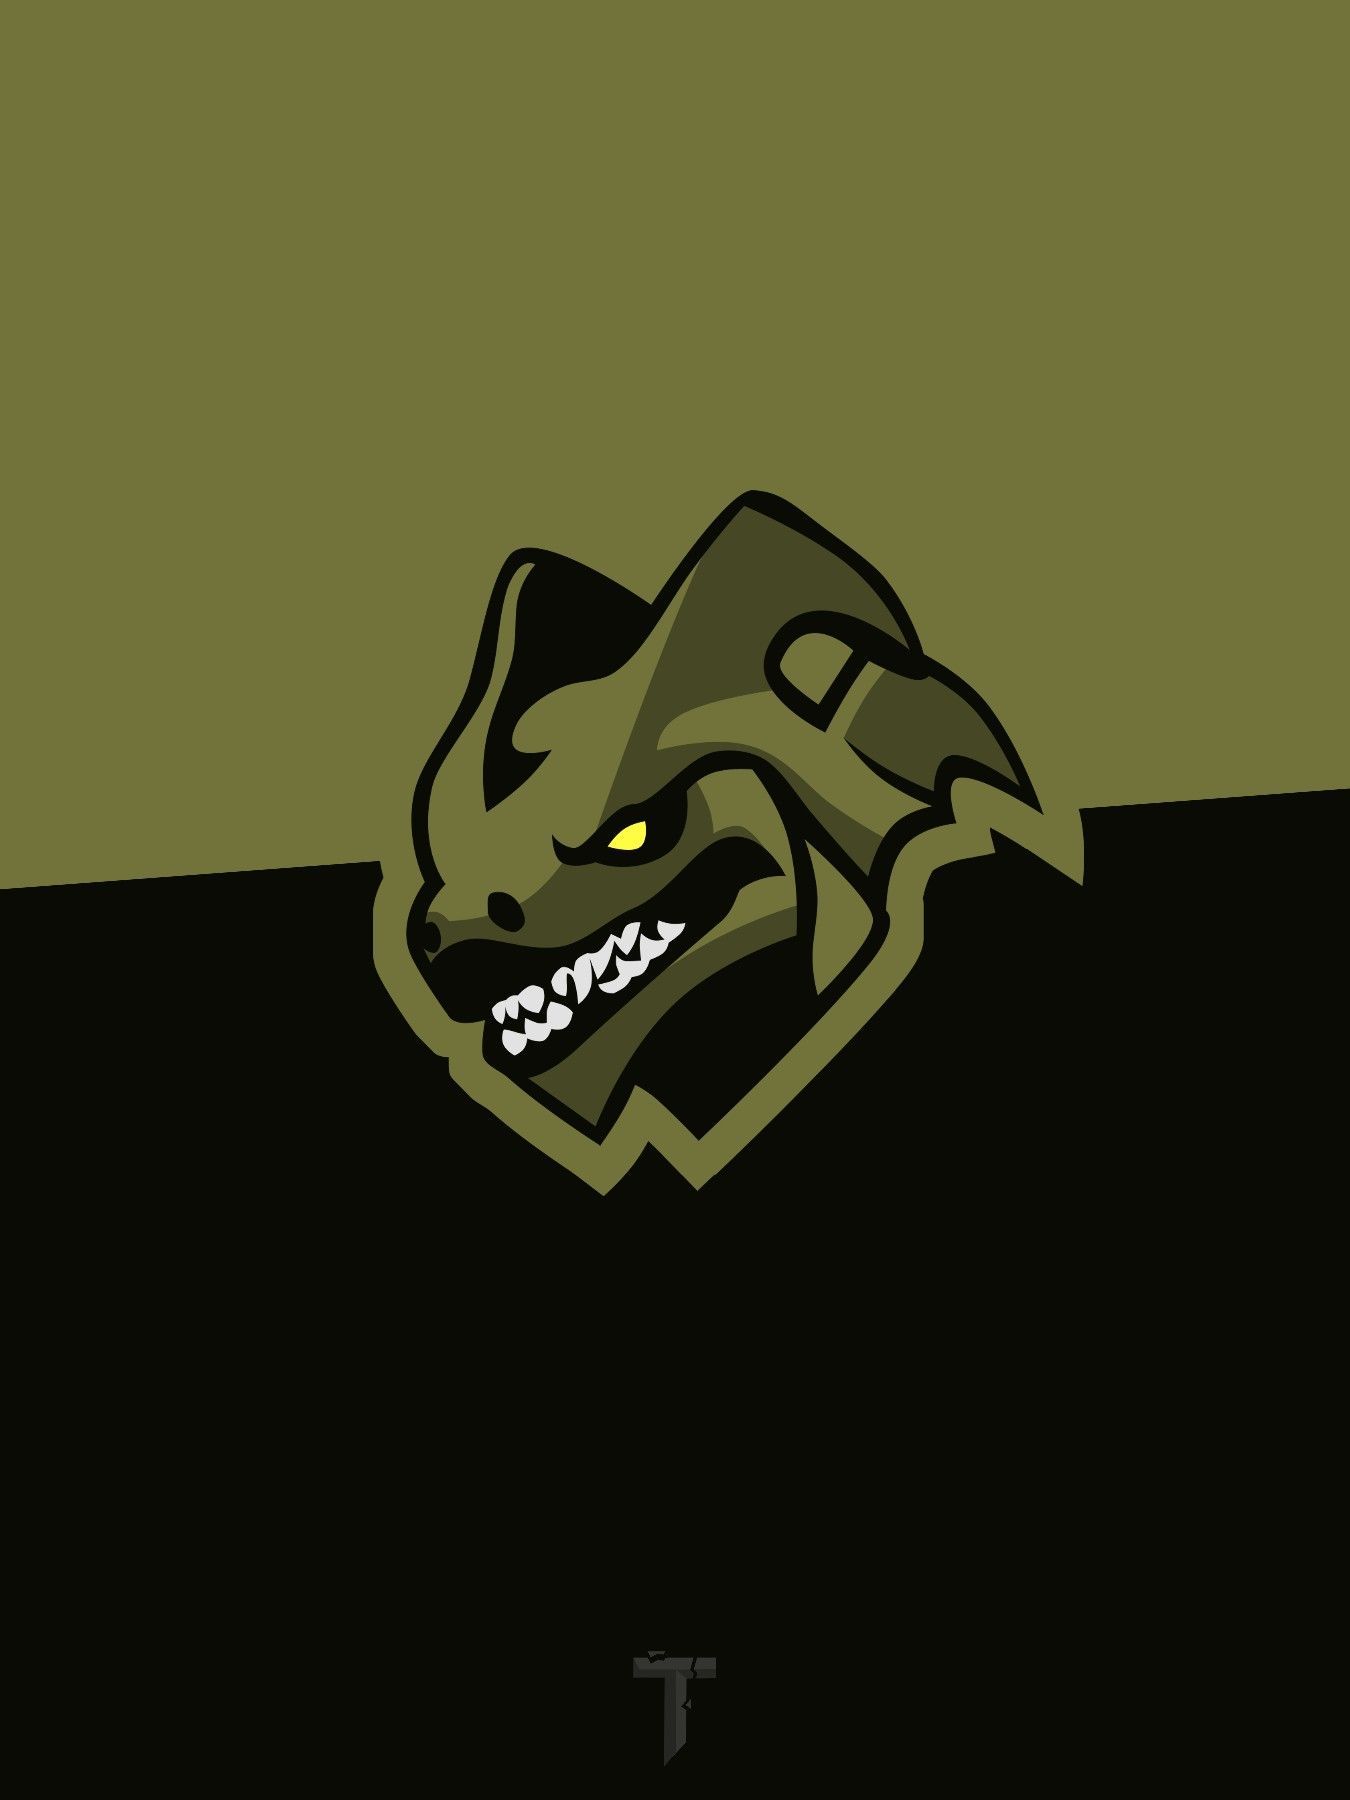 Hybrid mascot logo fortnite background wallpaper png. Logo design art, Game logo design, Art logo